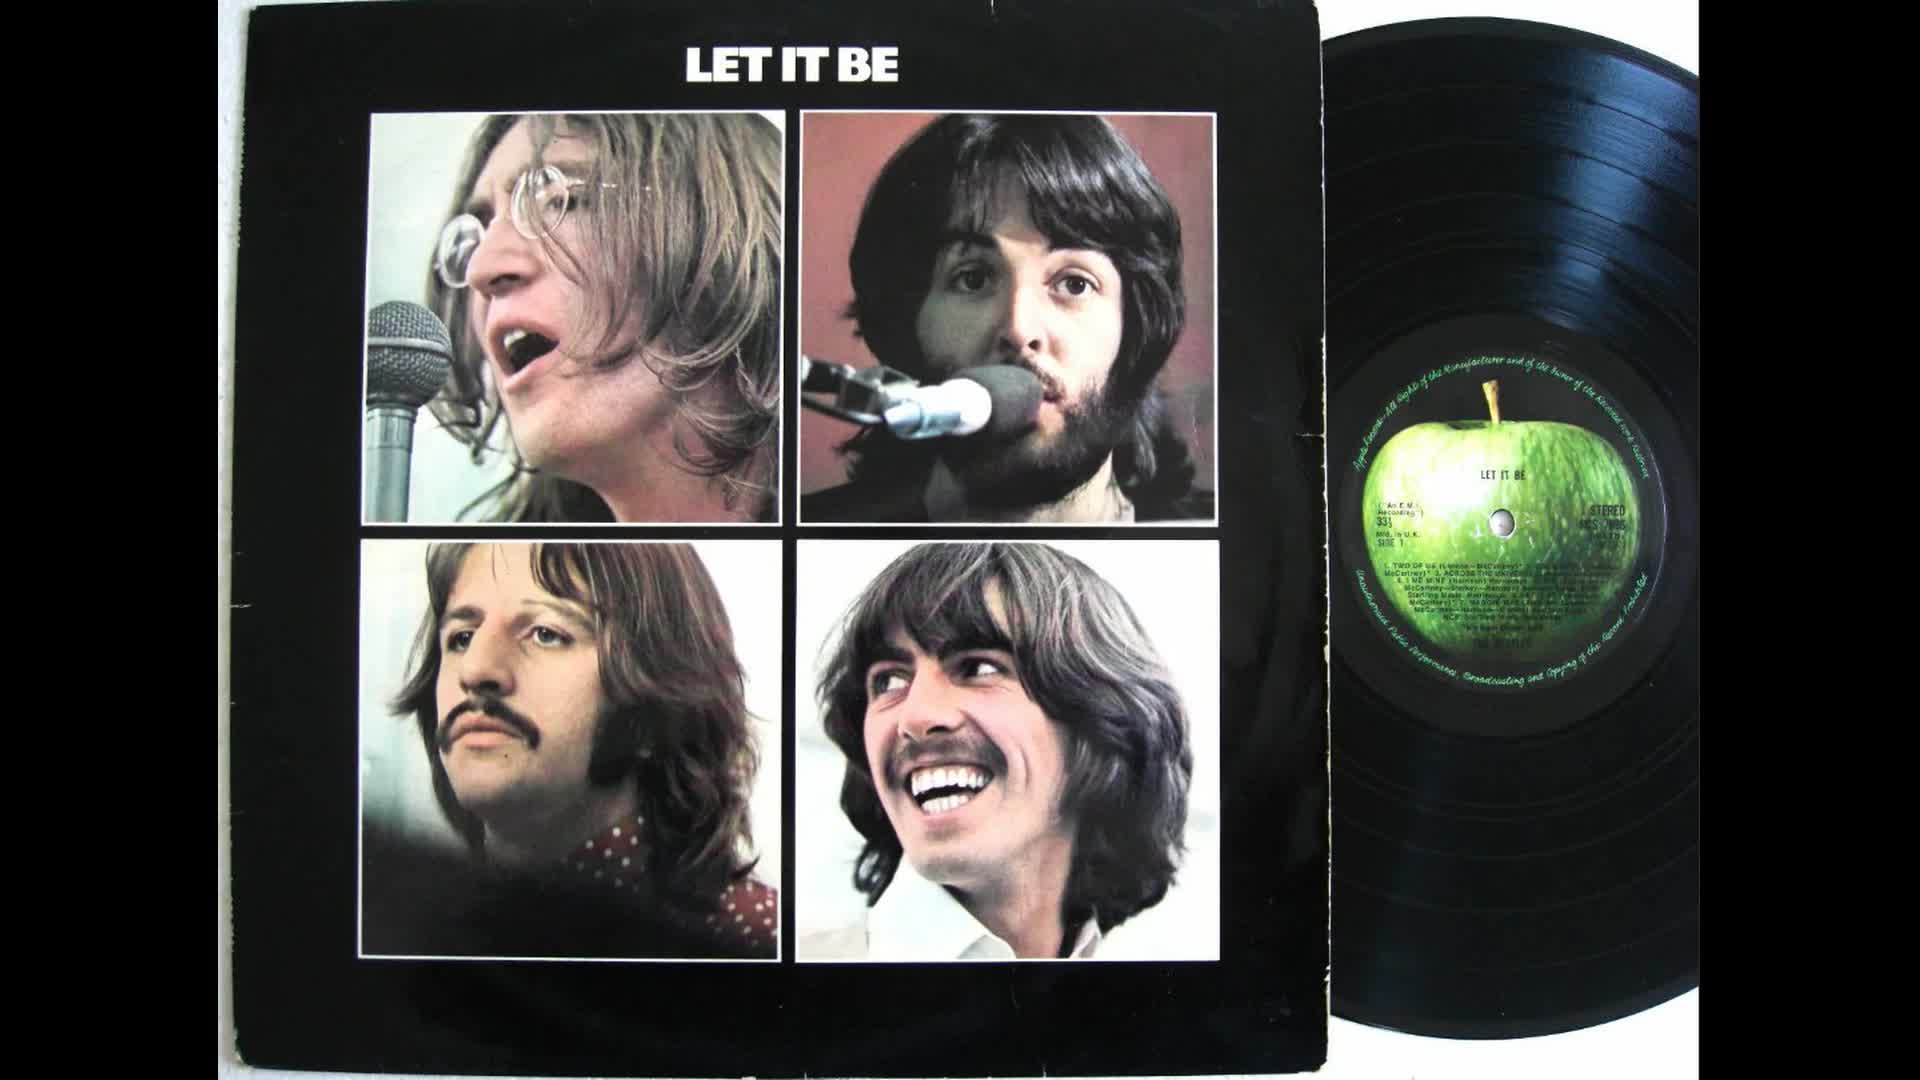 Битлз 1970 Let it be. The Beatles Let it be 1970 обложка. Beatles Let it be кассета. Beatles LP. Лет ит би слушать